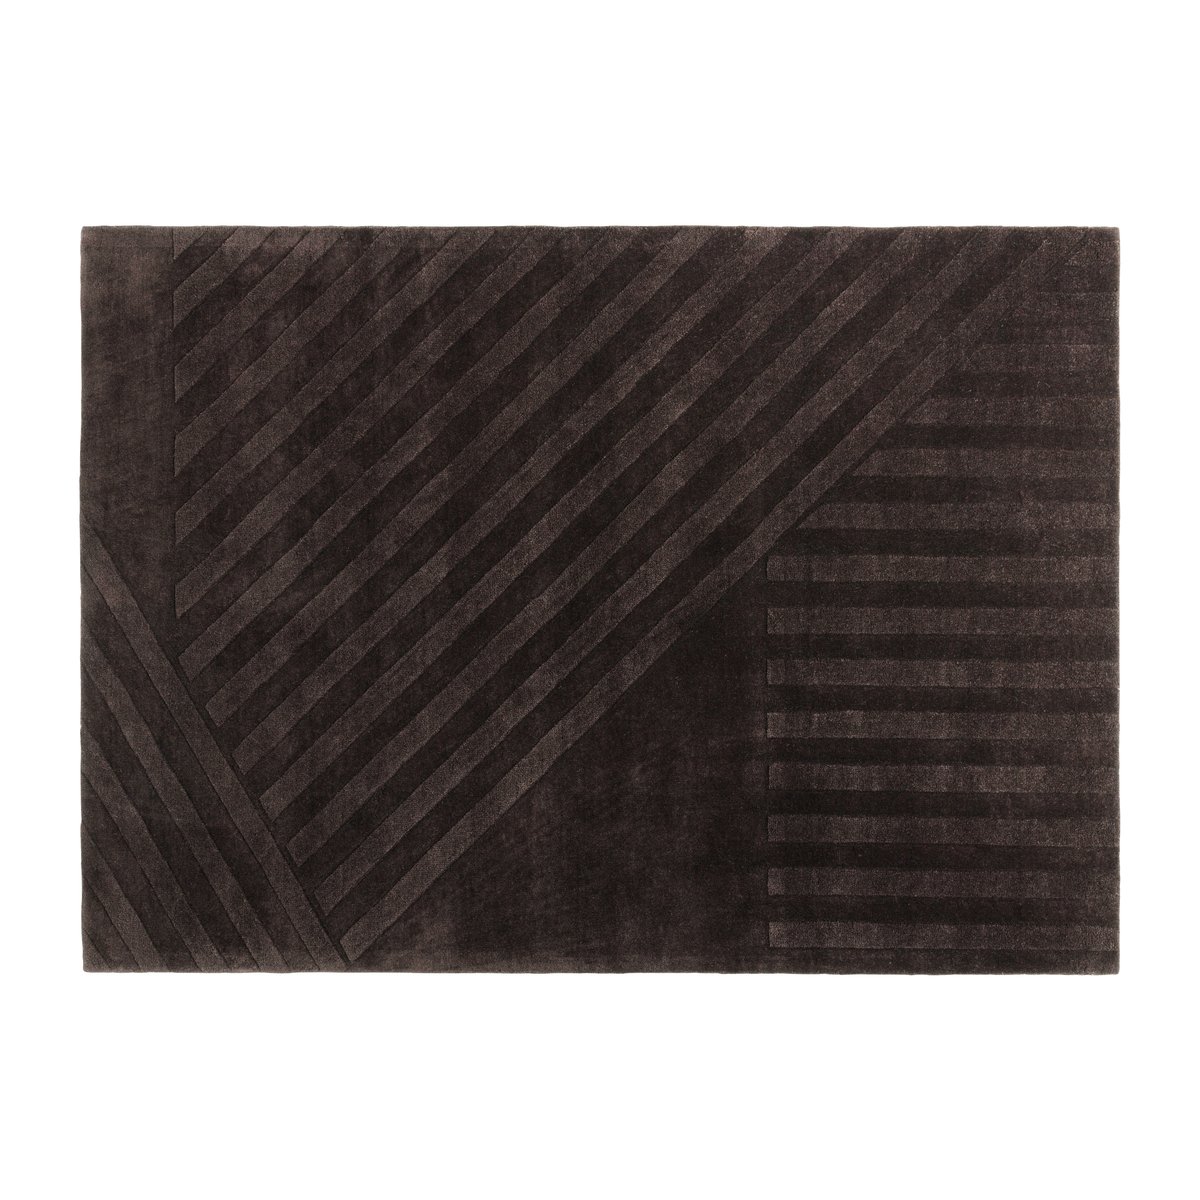 NJRD Levels wollen vloerkleed stripes bruin 200x300 cm